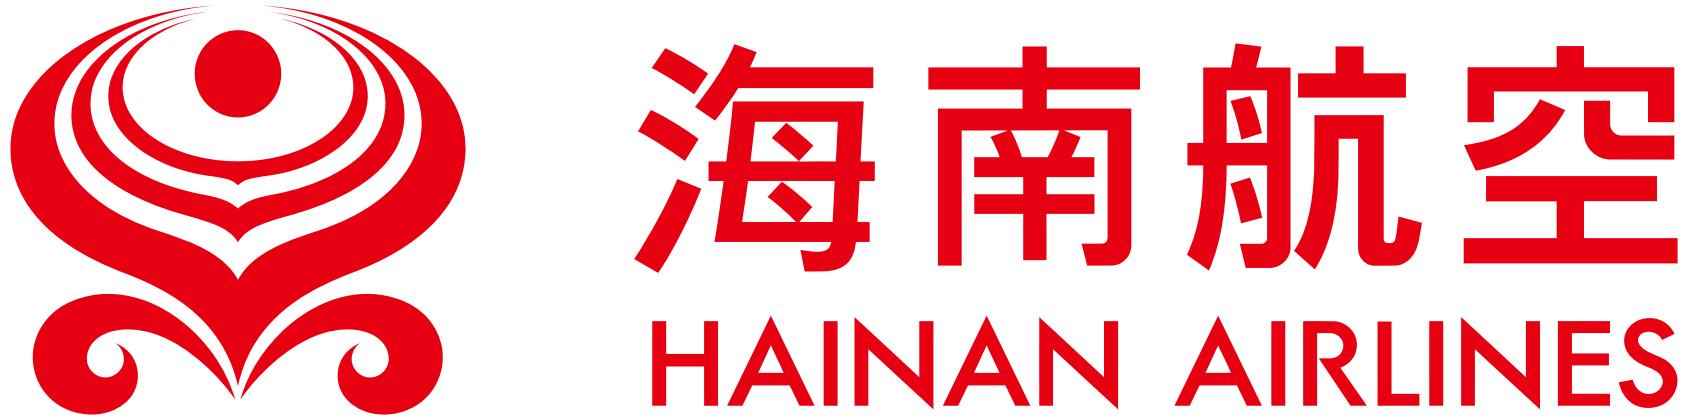 Hainan Airlines Logo [EPS File]